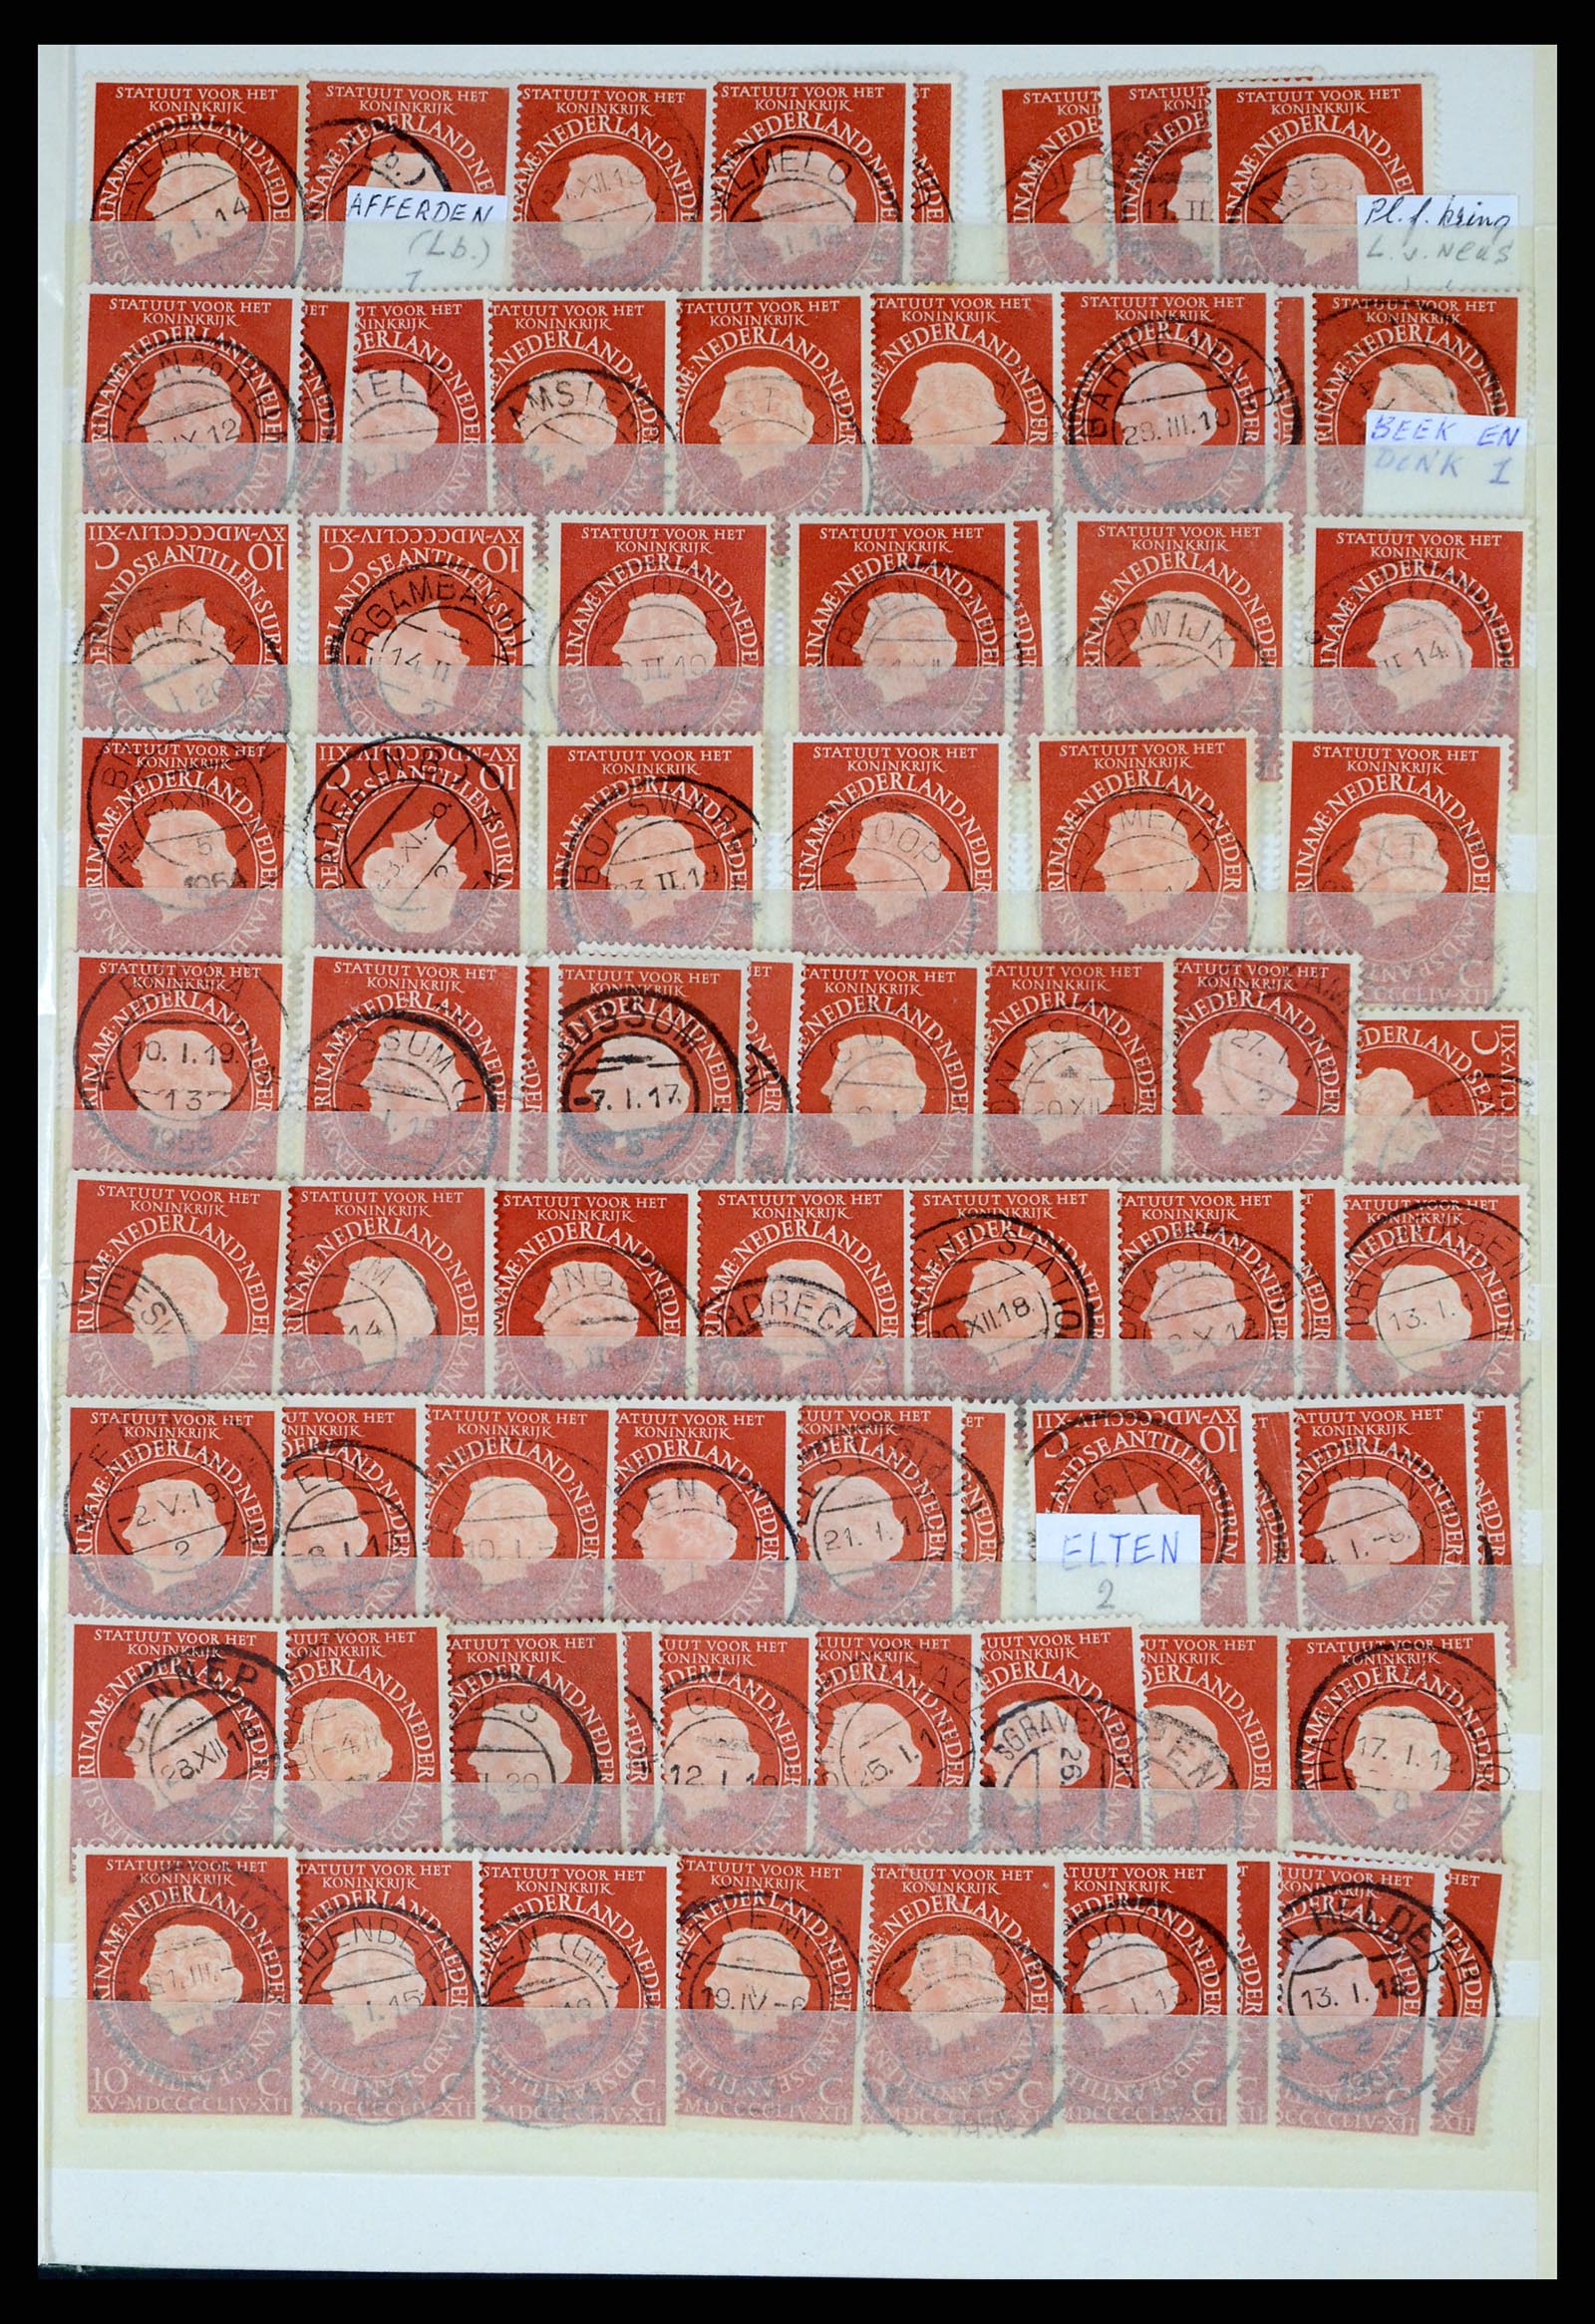 37424 049 - Stamp collection 37424 Netherlands shortbar cancels.